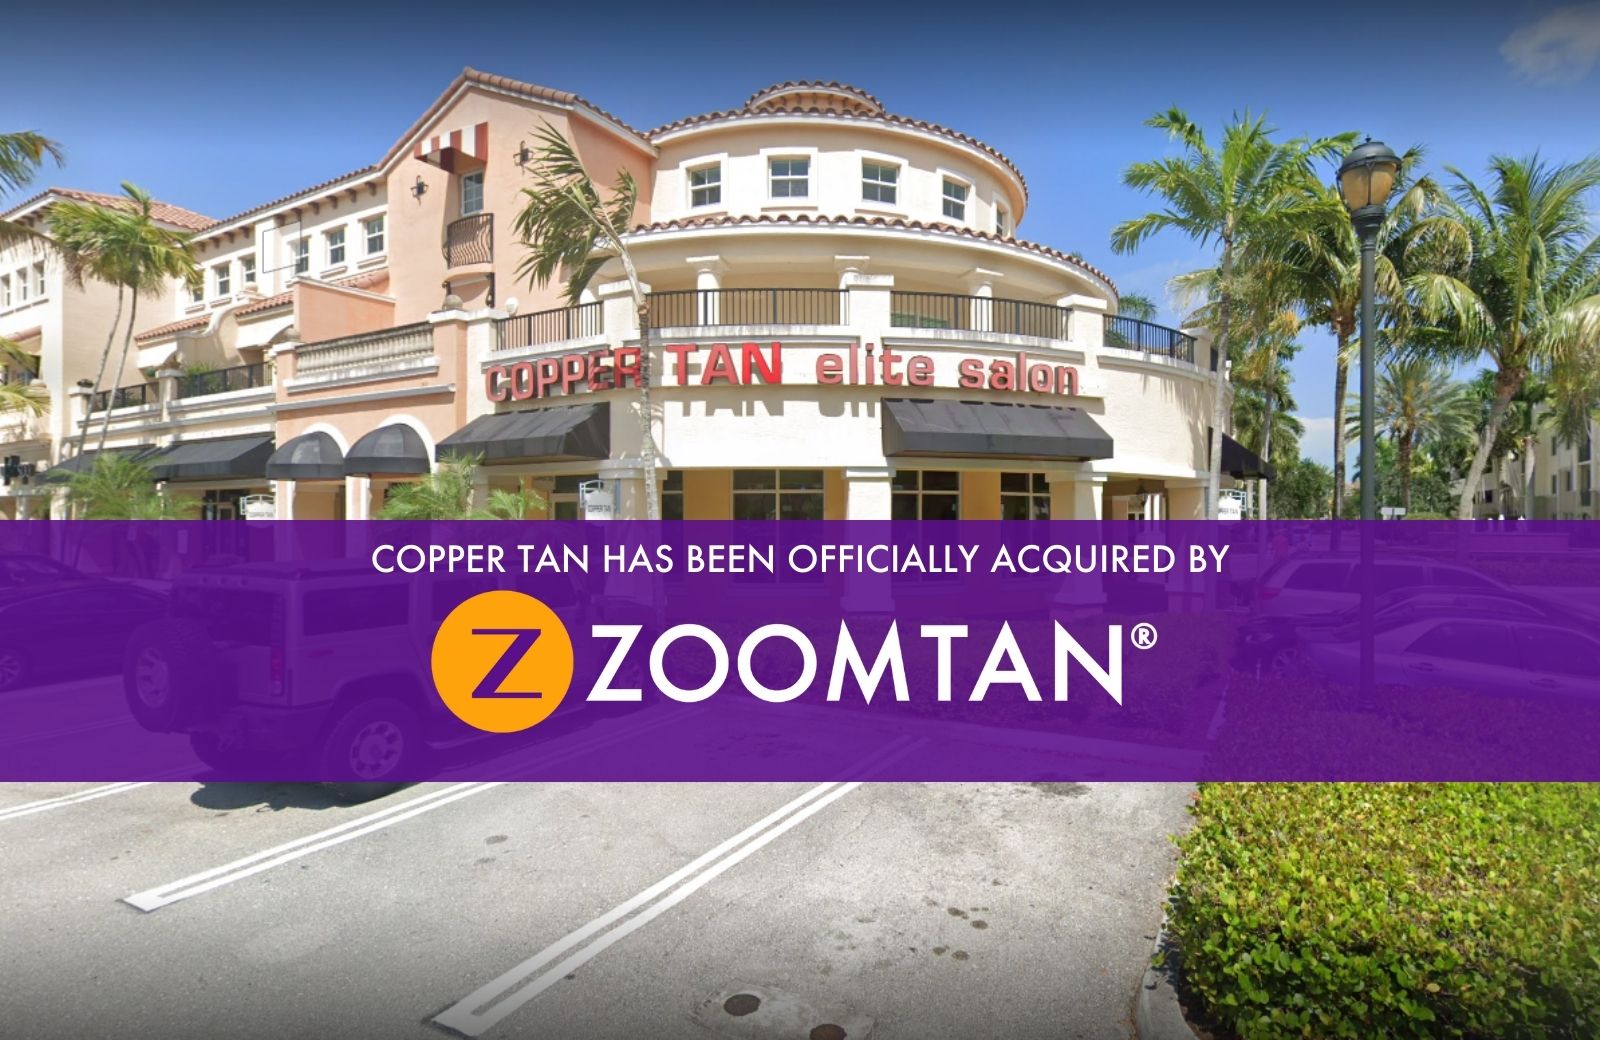 Zoom Tan Storefront in Boynton Beach, FL